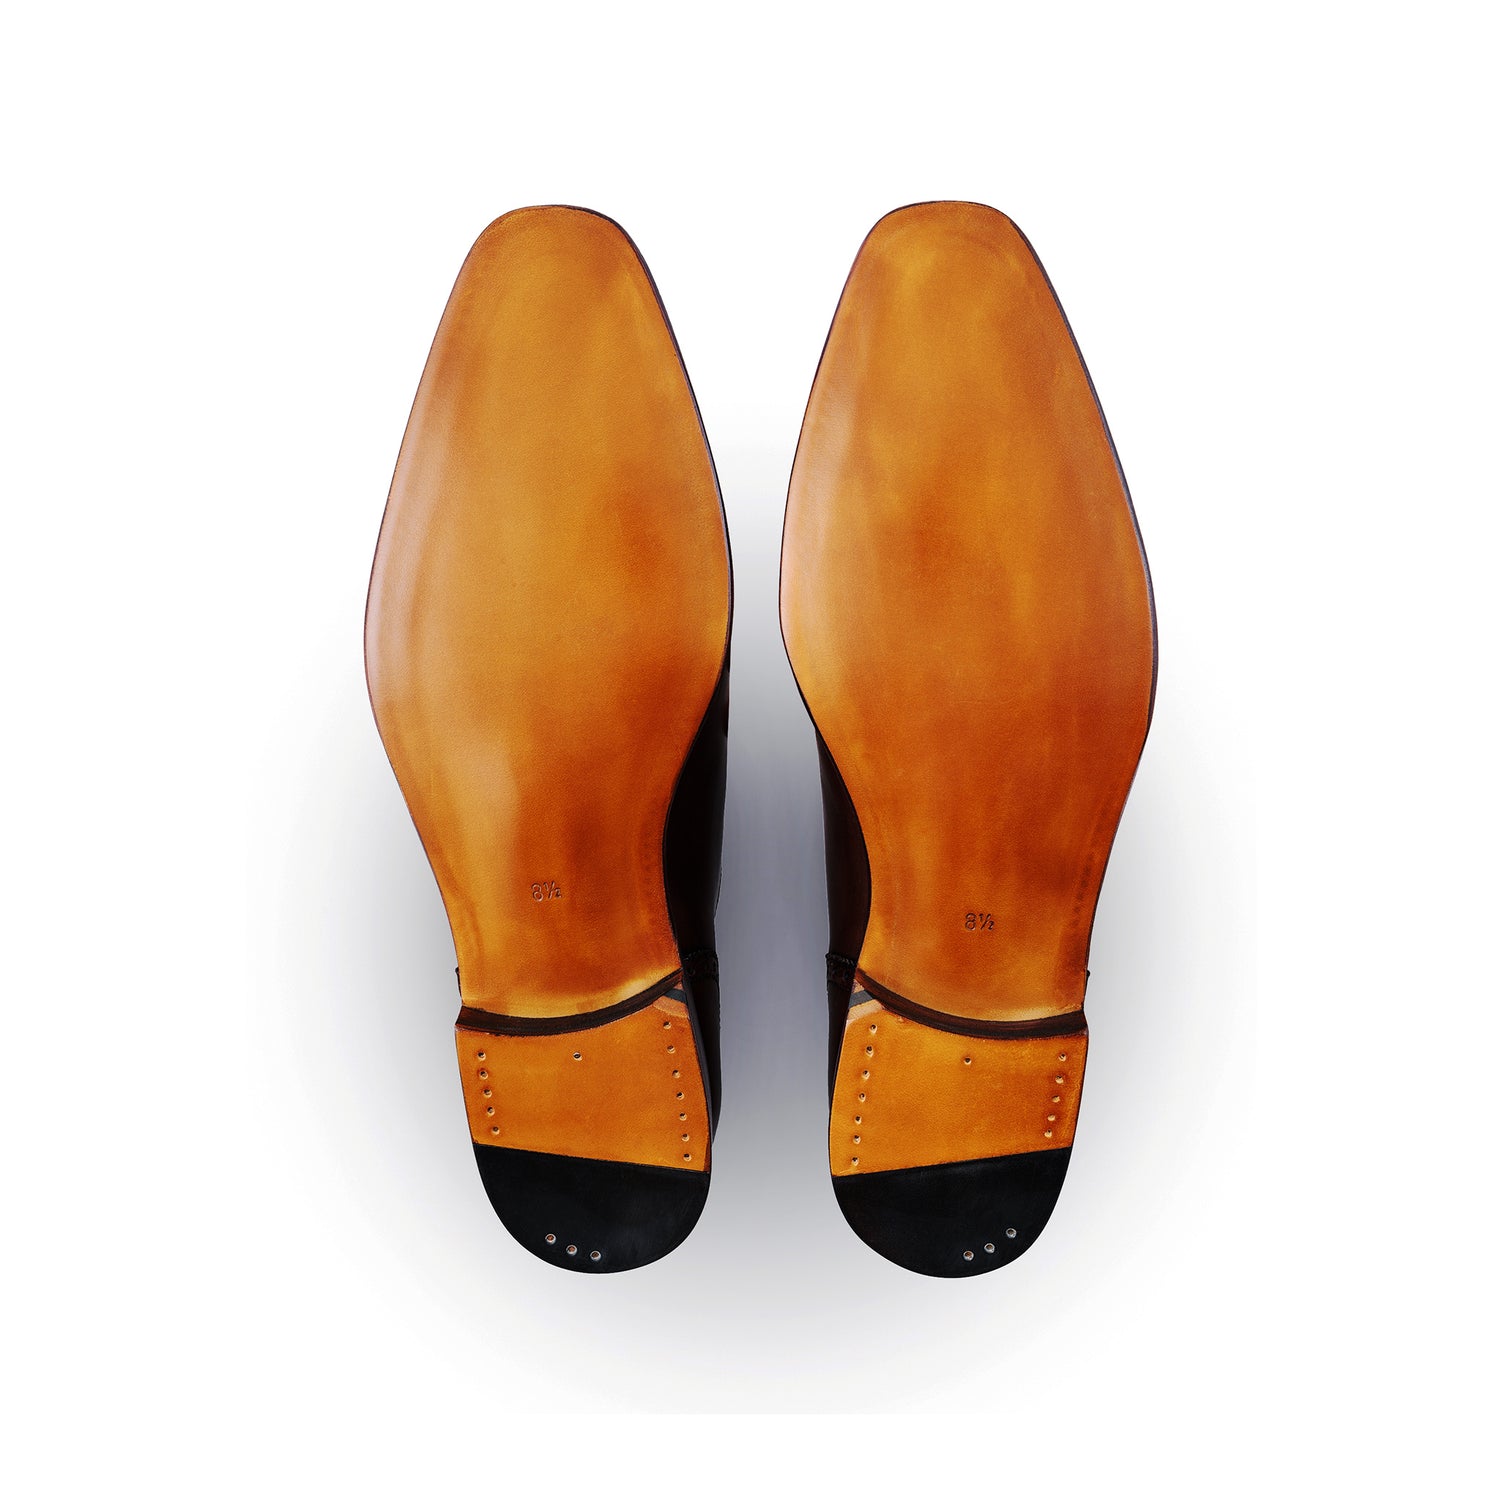 TLB Mallorca leather shoes 555 / ALAN / VEGANO CUERO